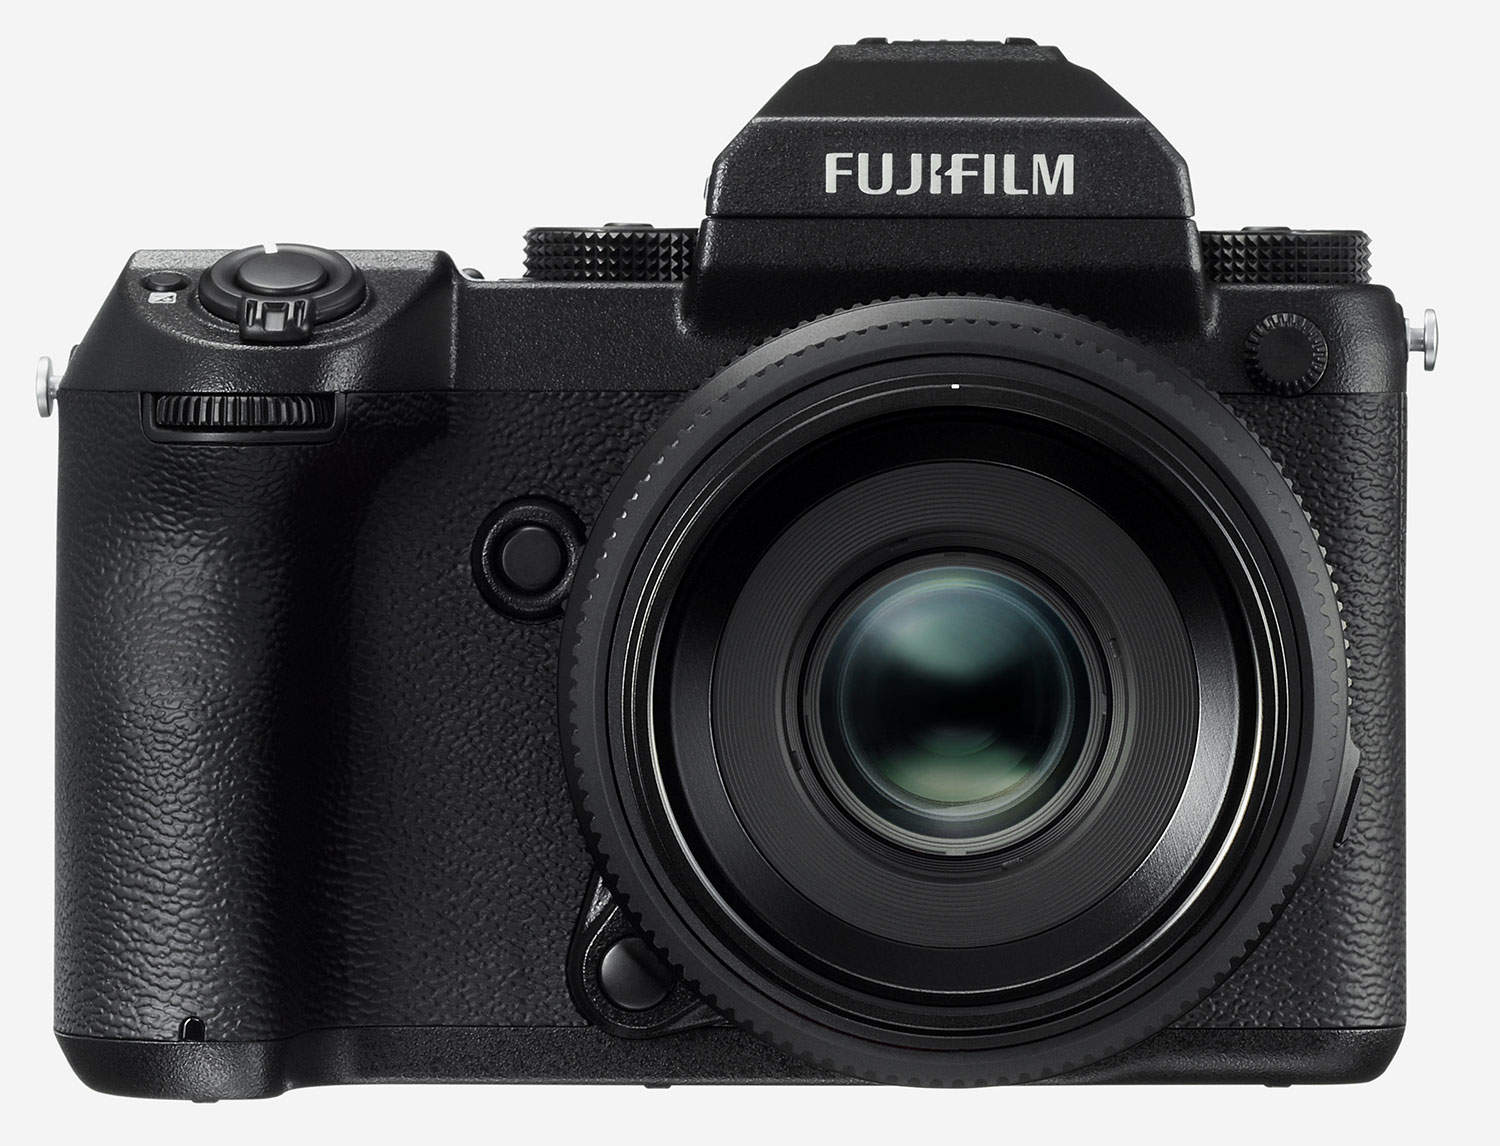 Fujifilm caps off a big year with the GFX 50S digital medium format camera.